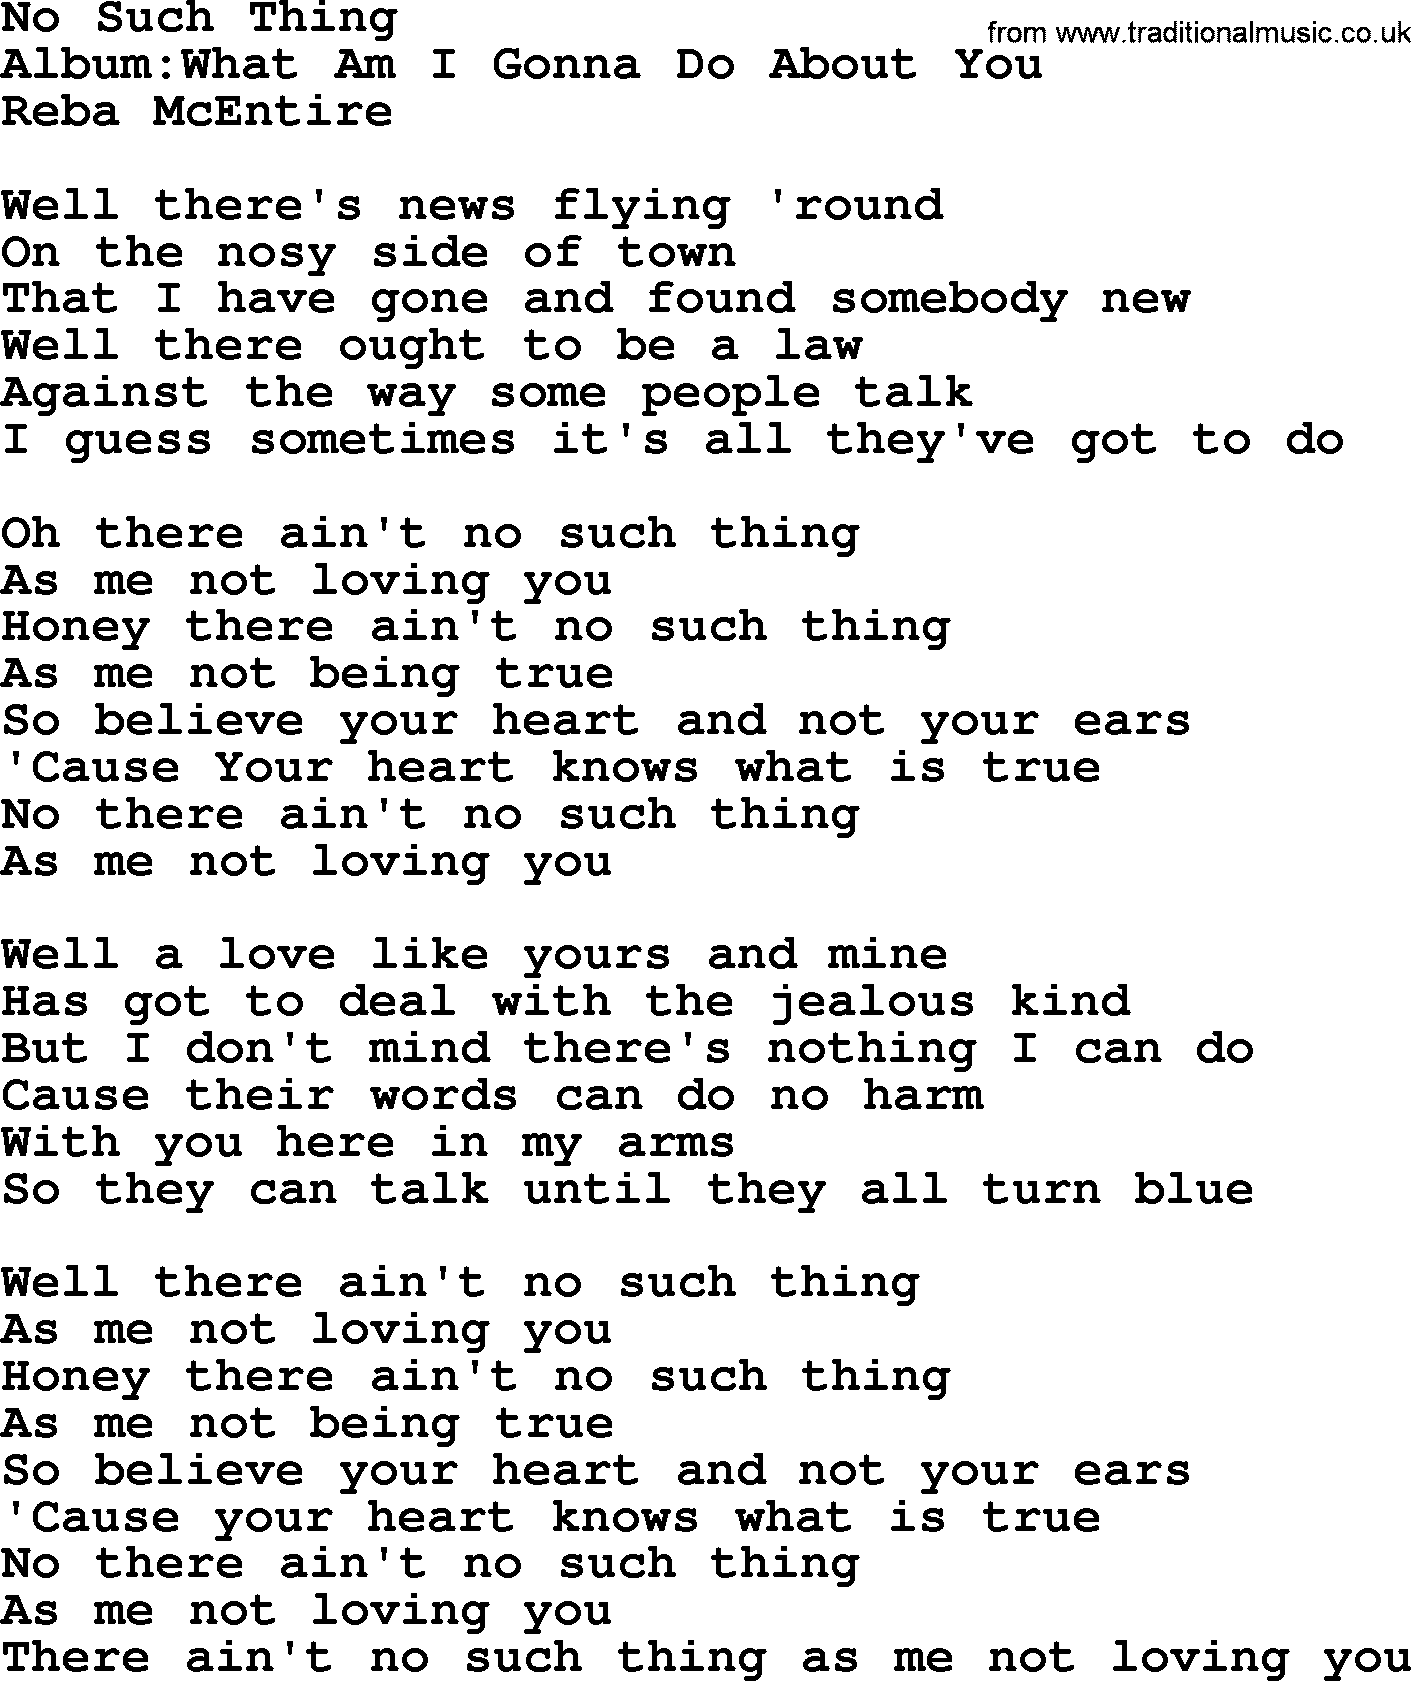 Reba McEntire song: No Such Thing lyrics